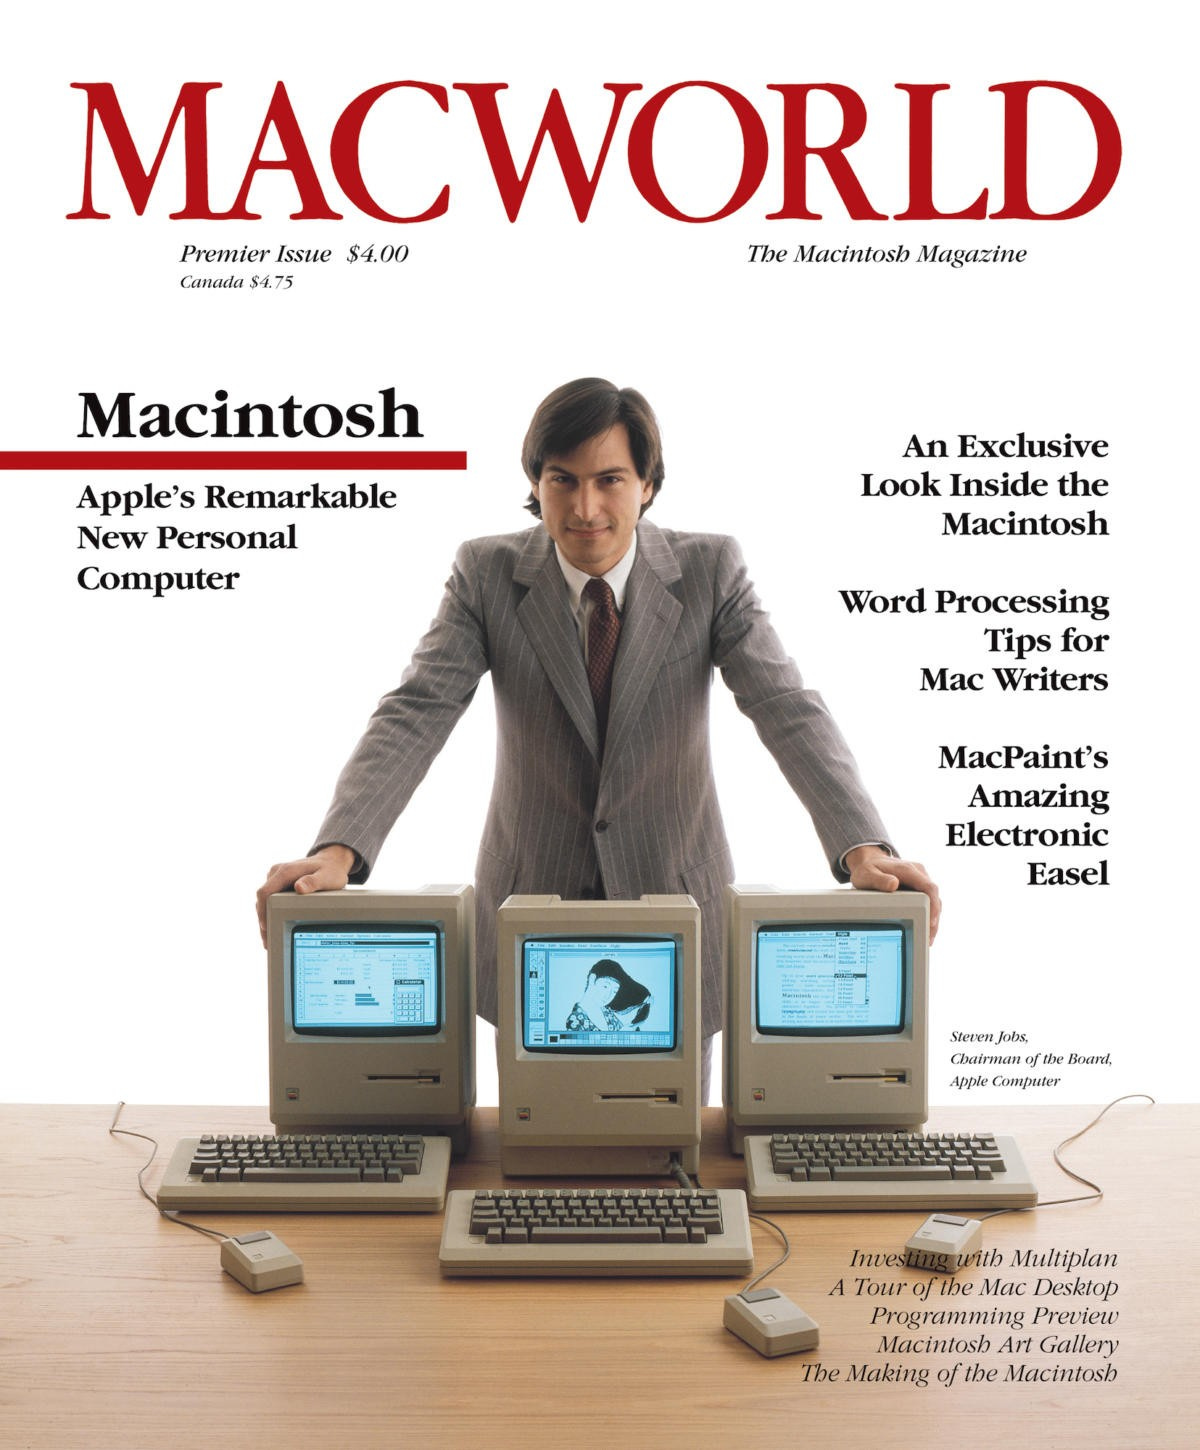 Throwback Thursday! Steve Jobs, 1984 and the first Apple Macintosh